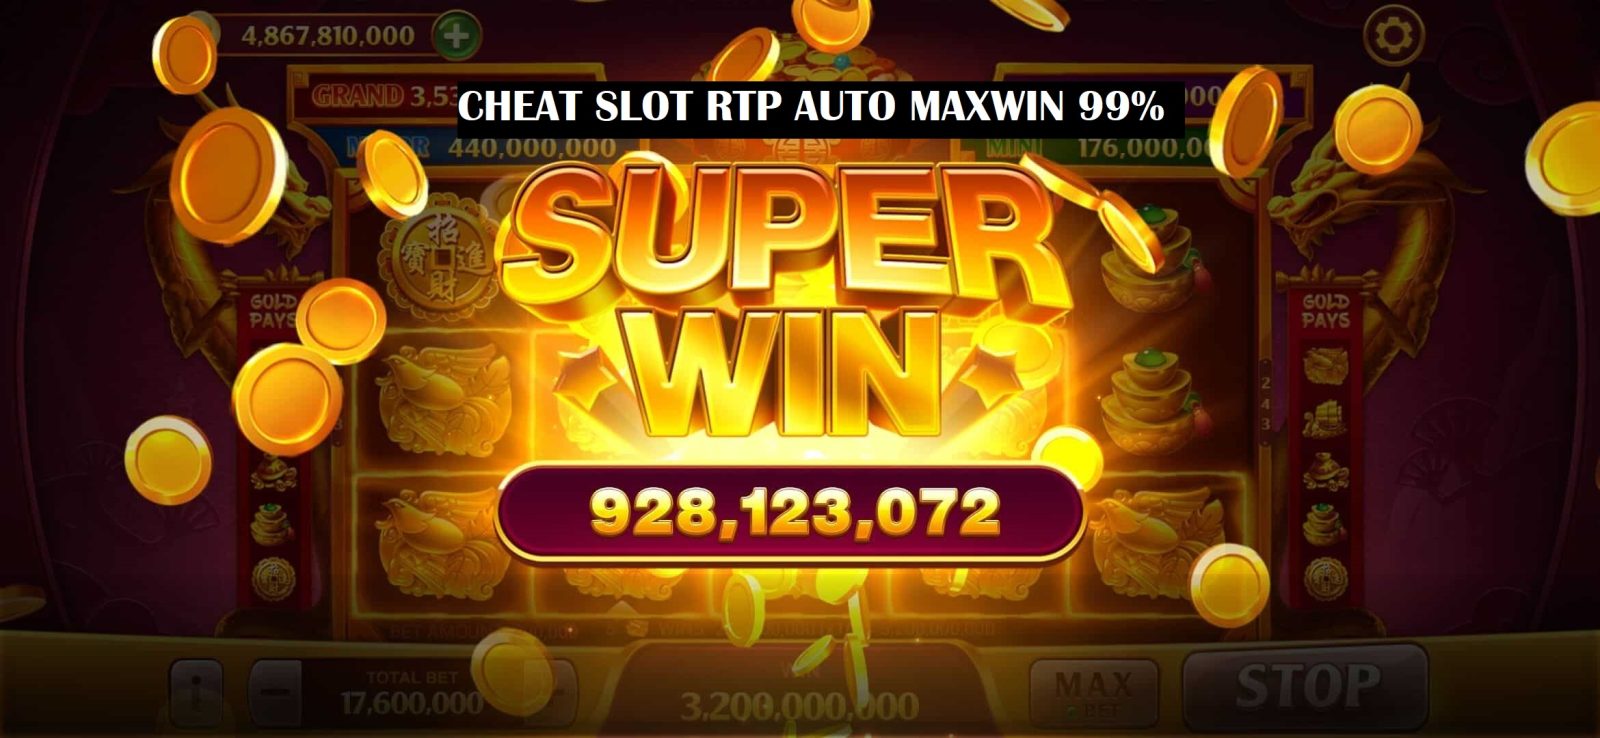 Cheat Slot RTP Auto Maxwin Up To 99%